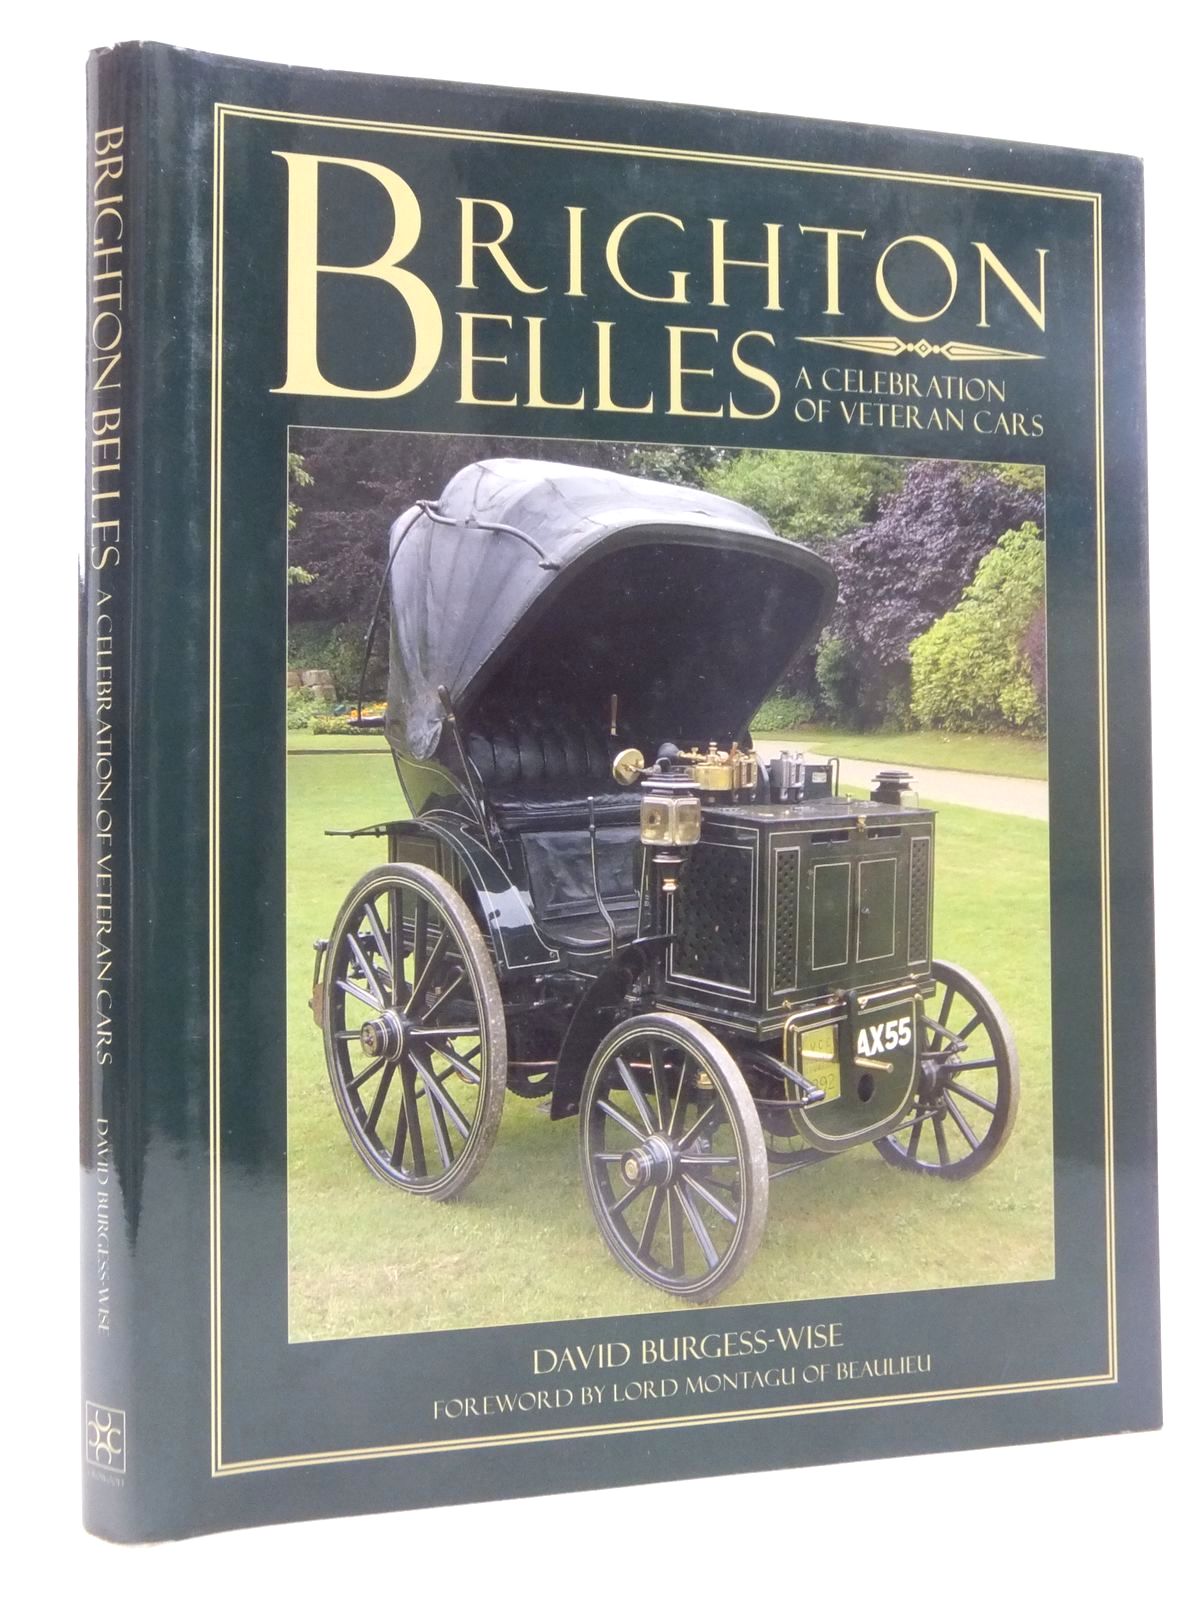 Brighton Belles A Celebration Of Veteran Cars